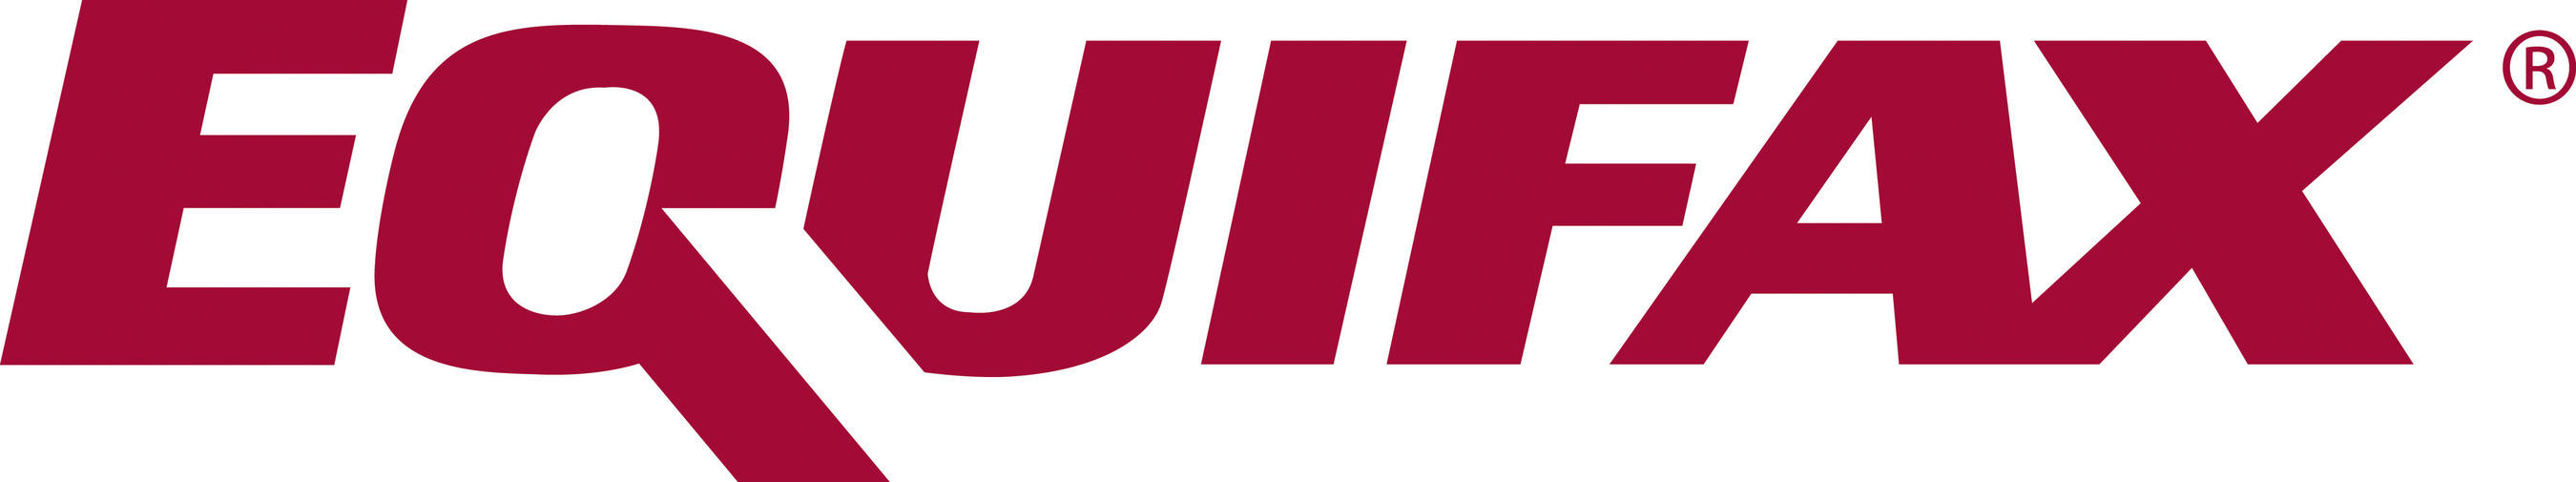 Equifax Inc Brand Logo